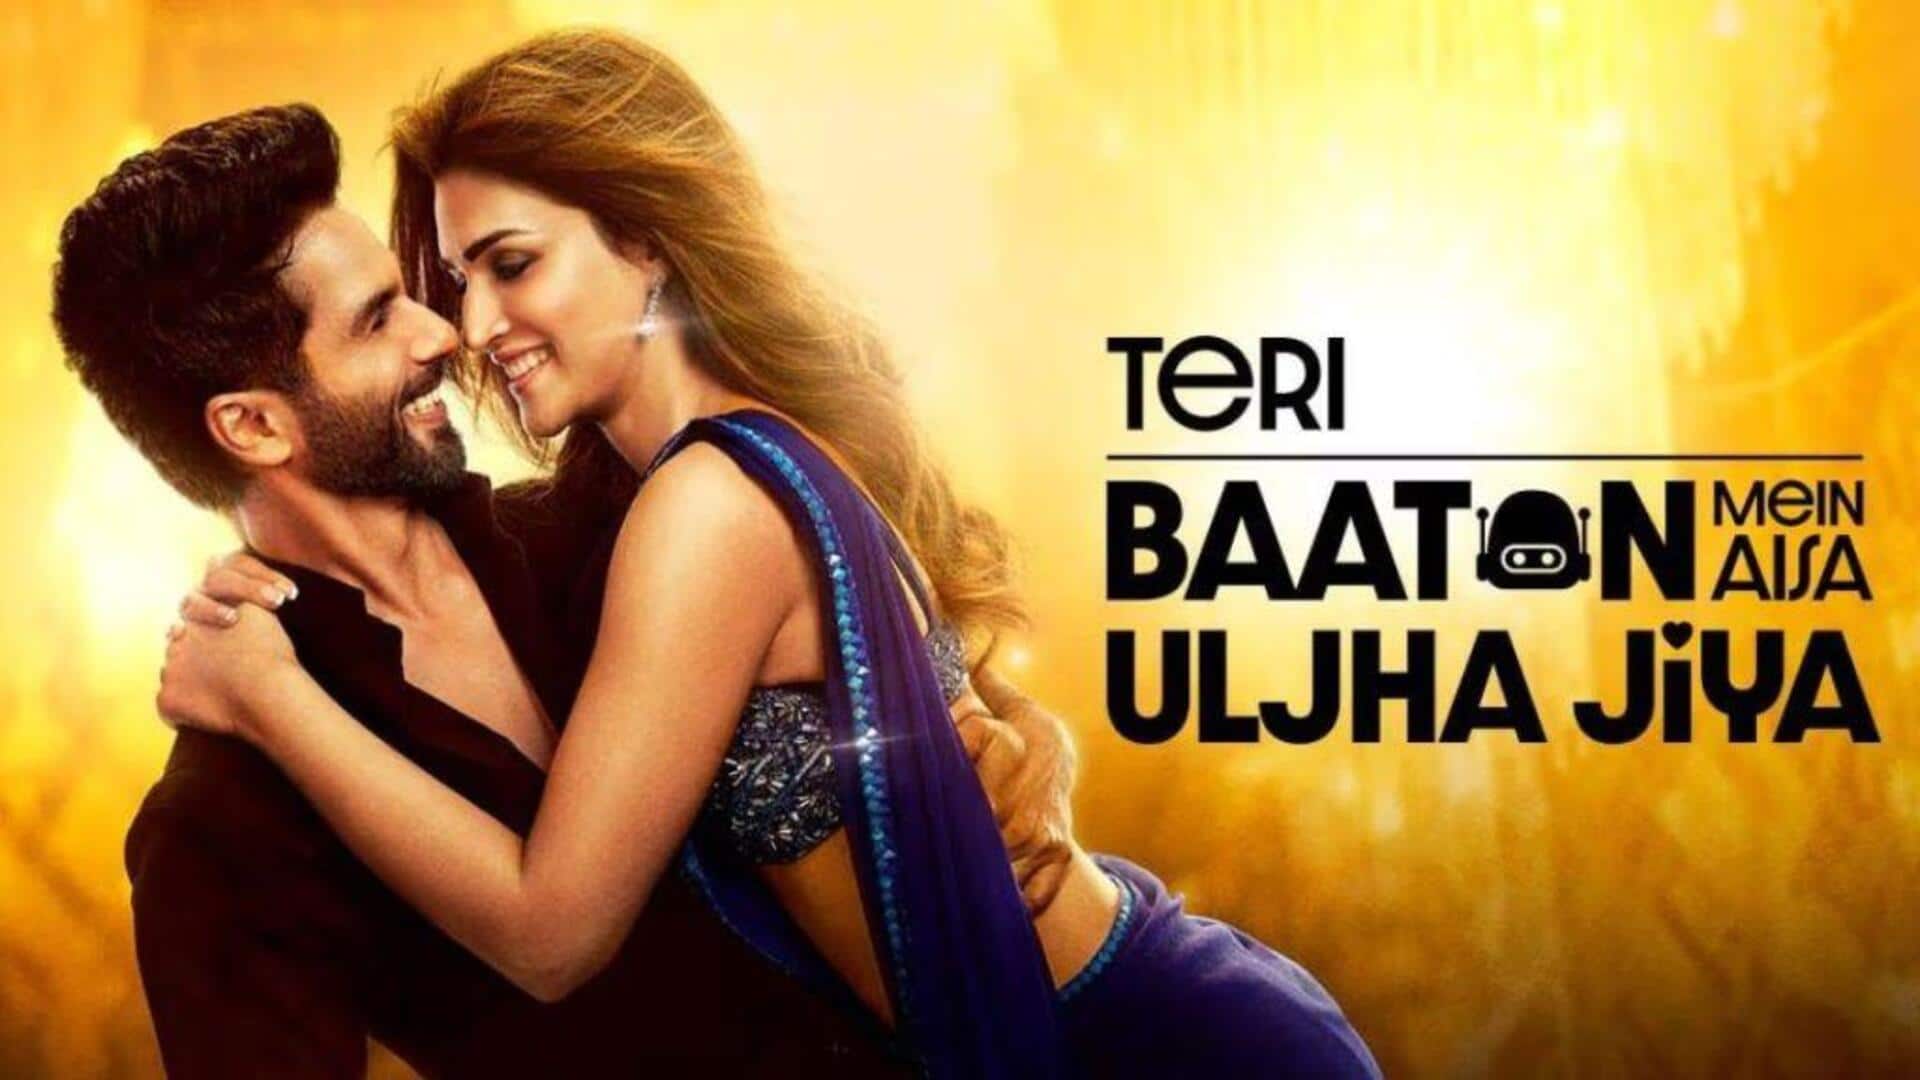 Box office: Shahid-Kriti's 'Teri Baaton...' earns less than Rs. 3cr